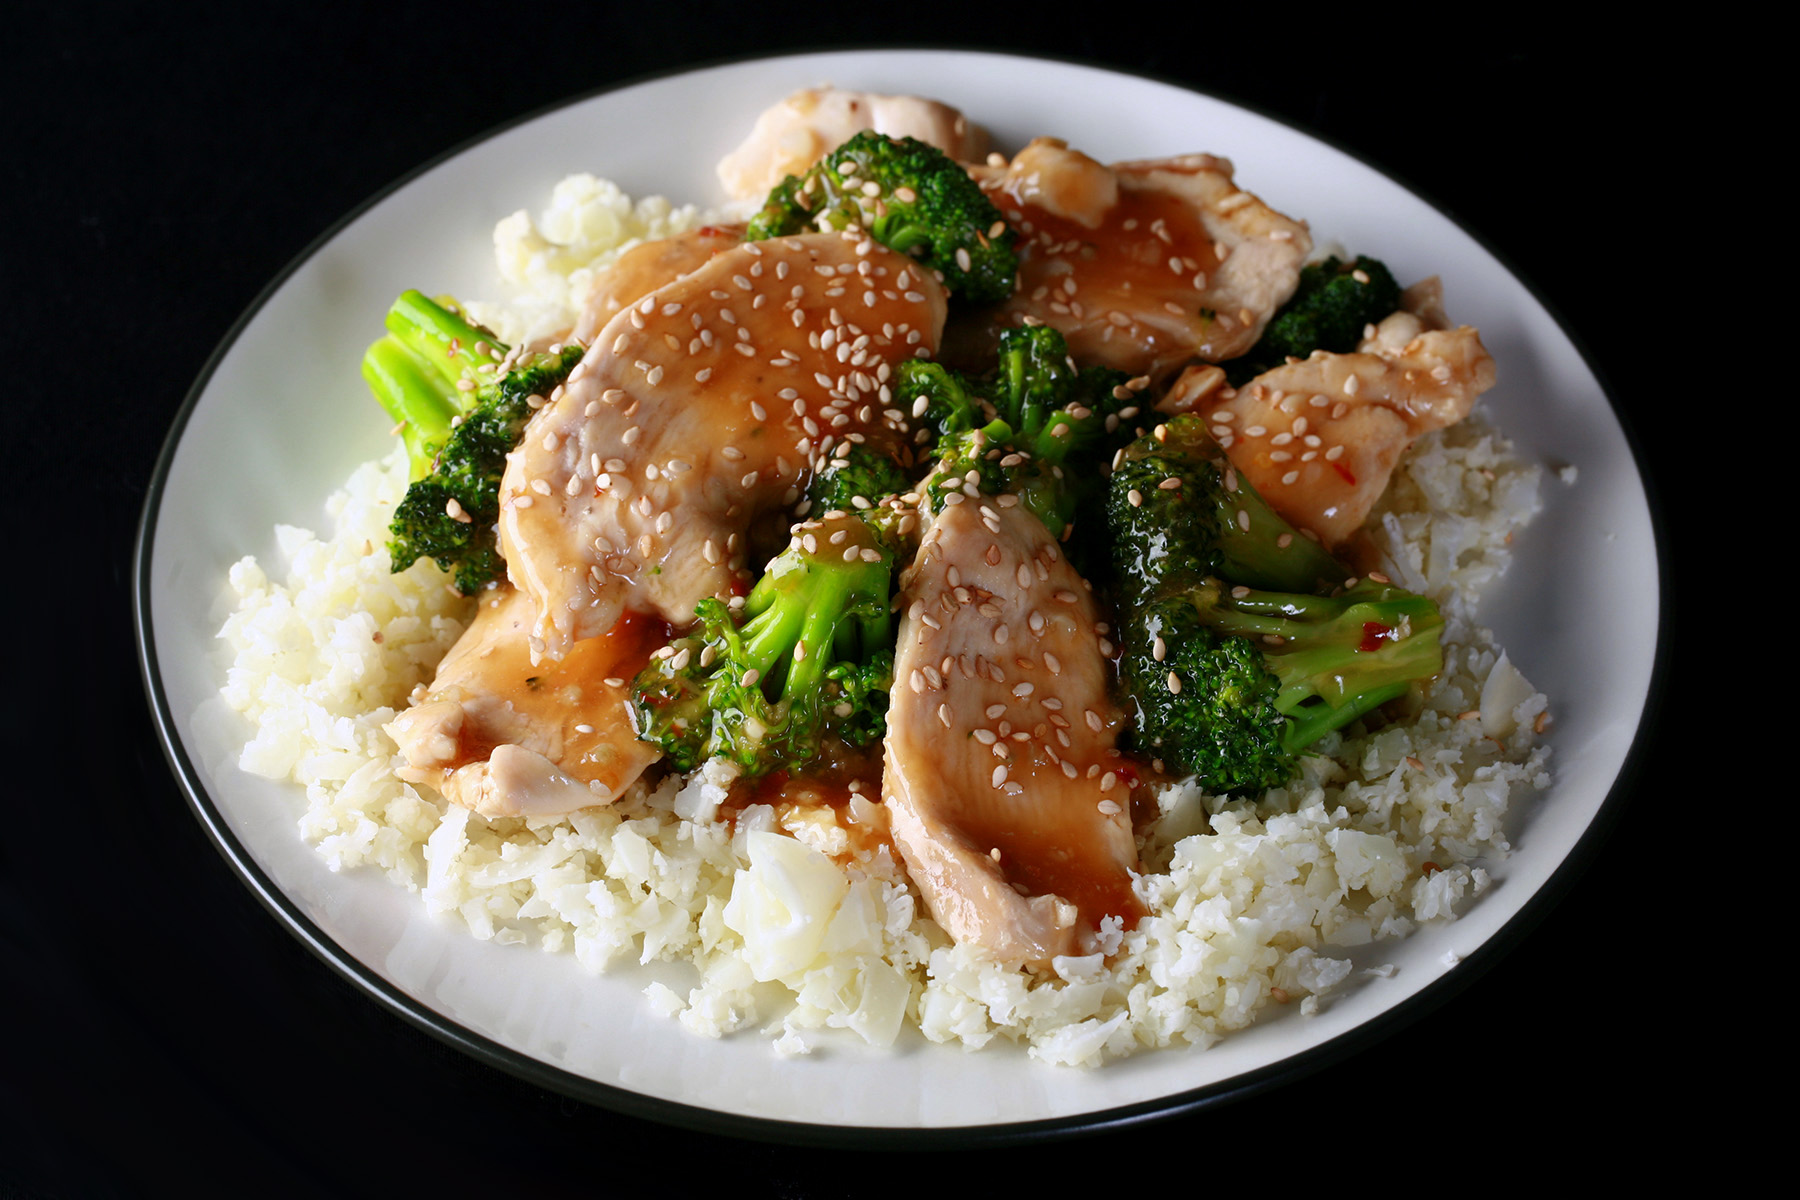 A plate of Keto Sesame Chicken, served on Cauliflower rice.